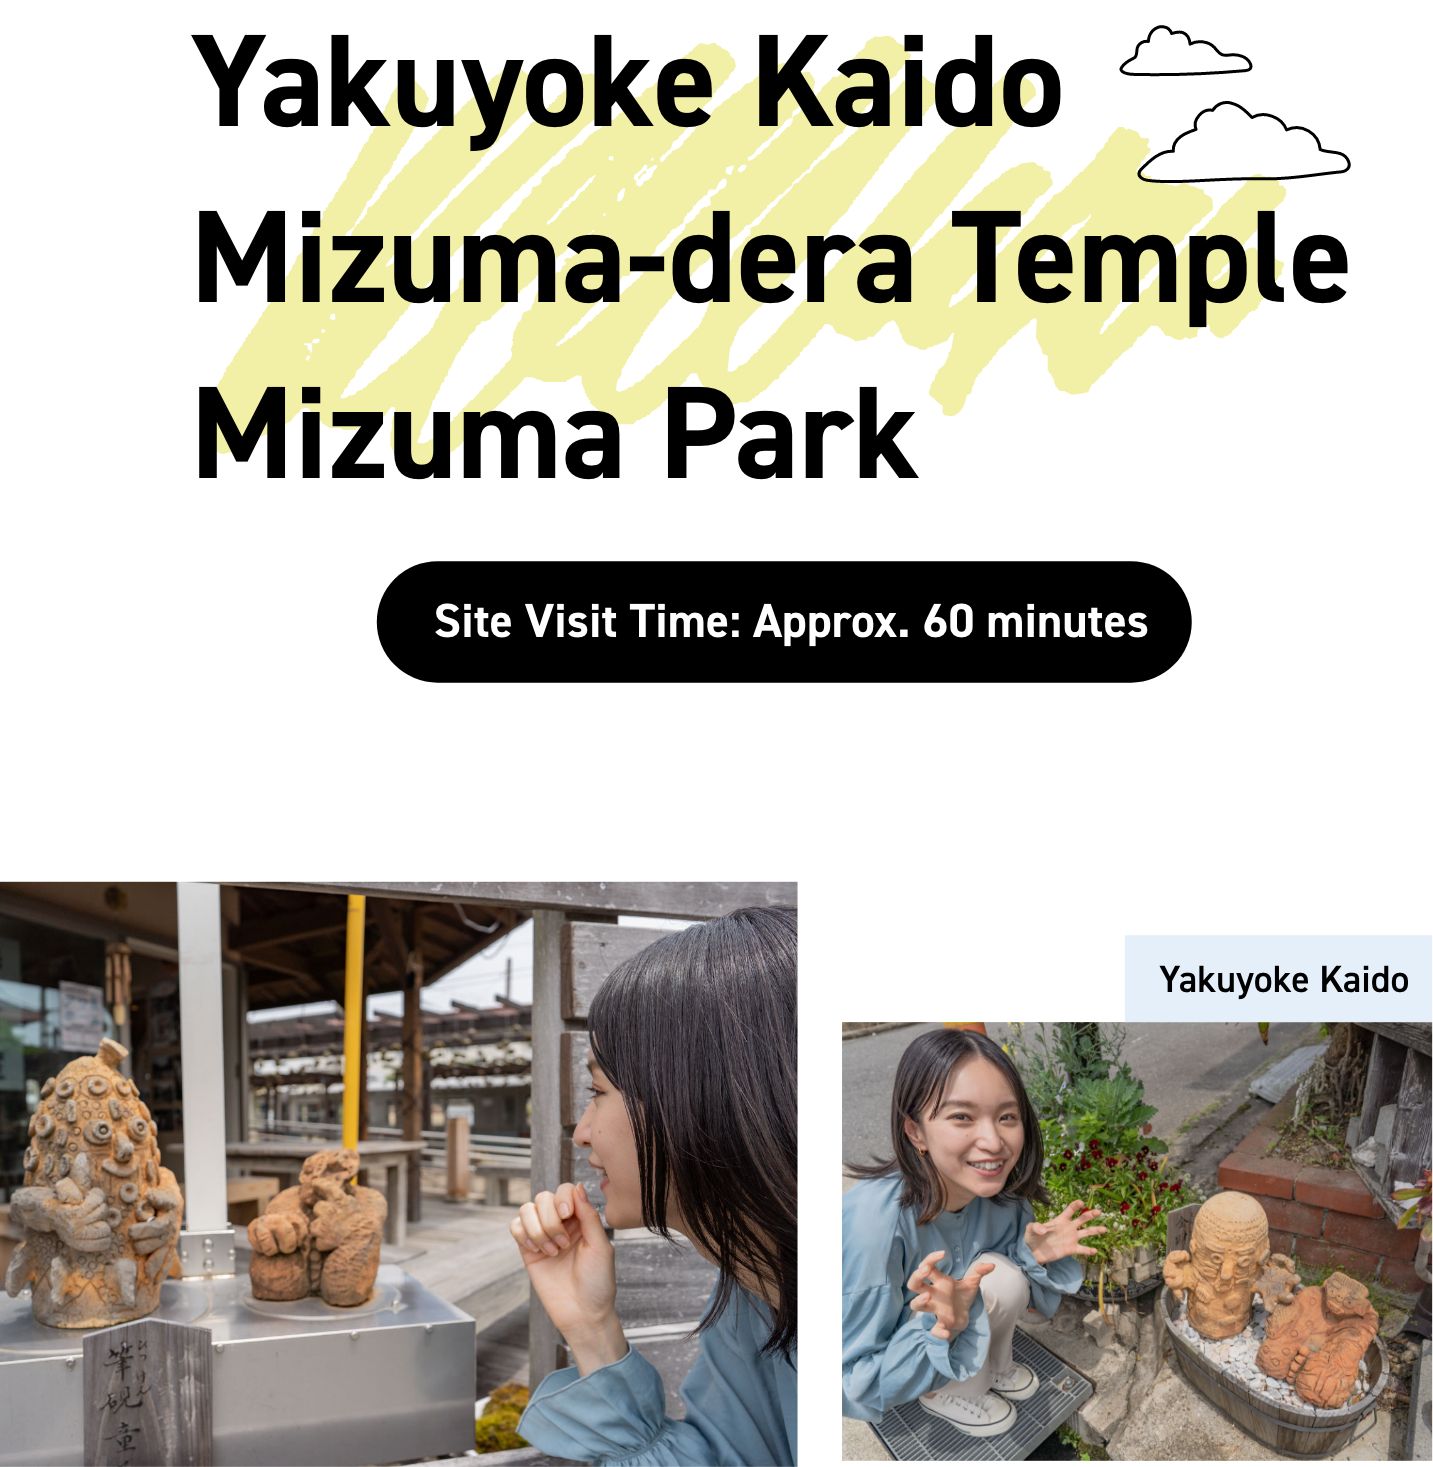 Yakuyoke Kaido, Mizuma-dera Temple, Mizuma Park